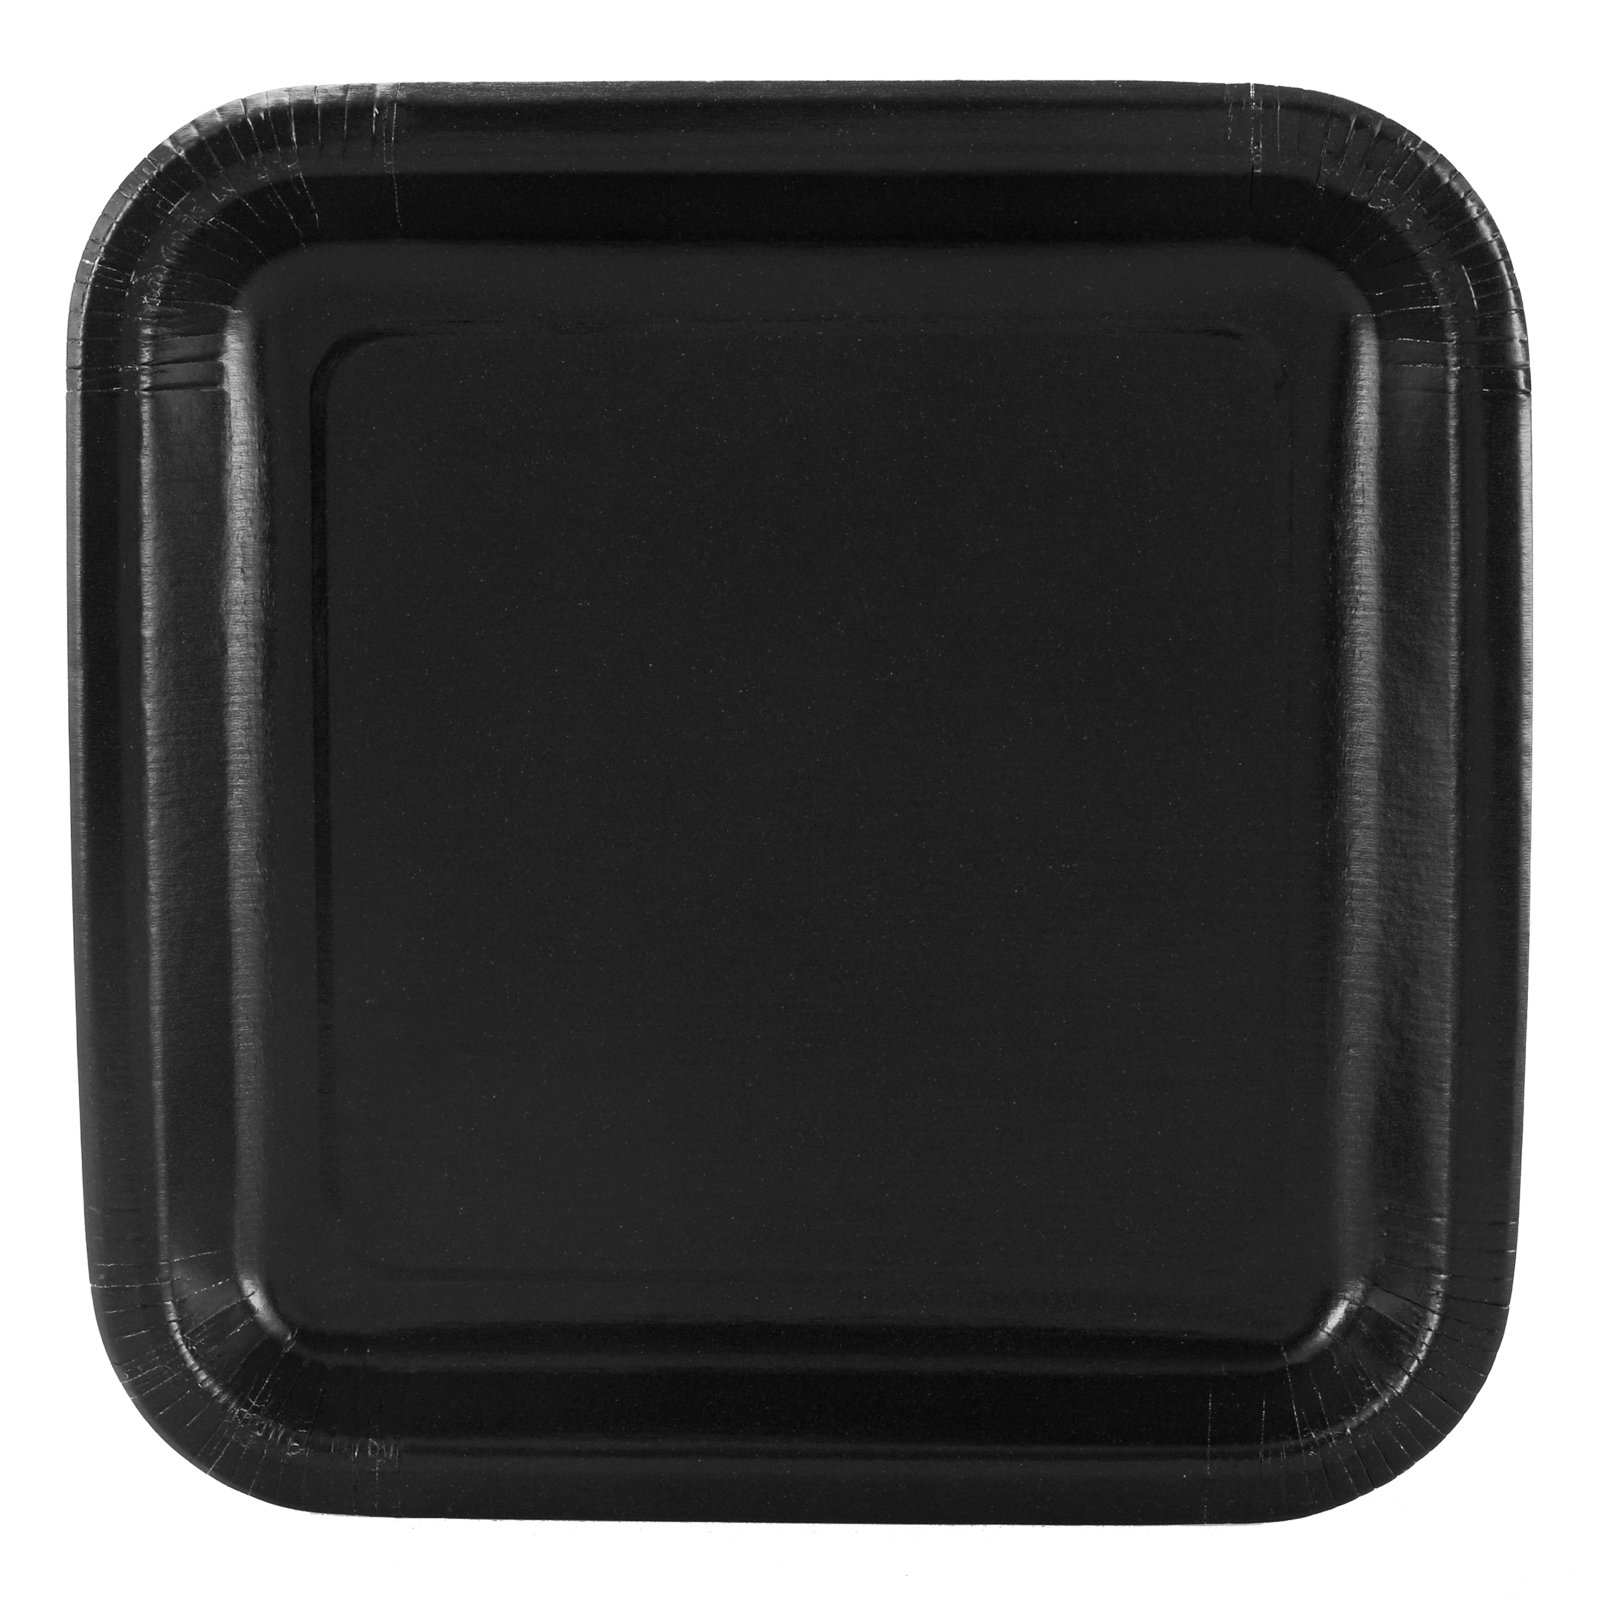 Black Square Dessert Plates (12 count)